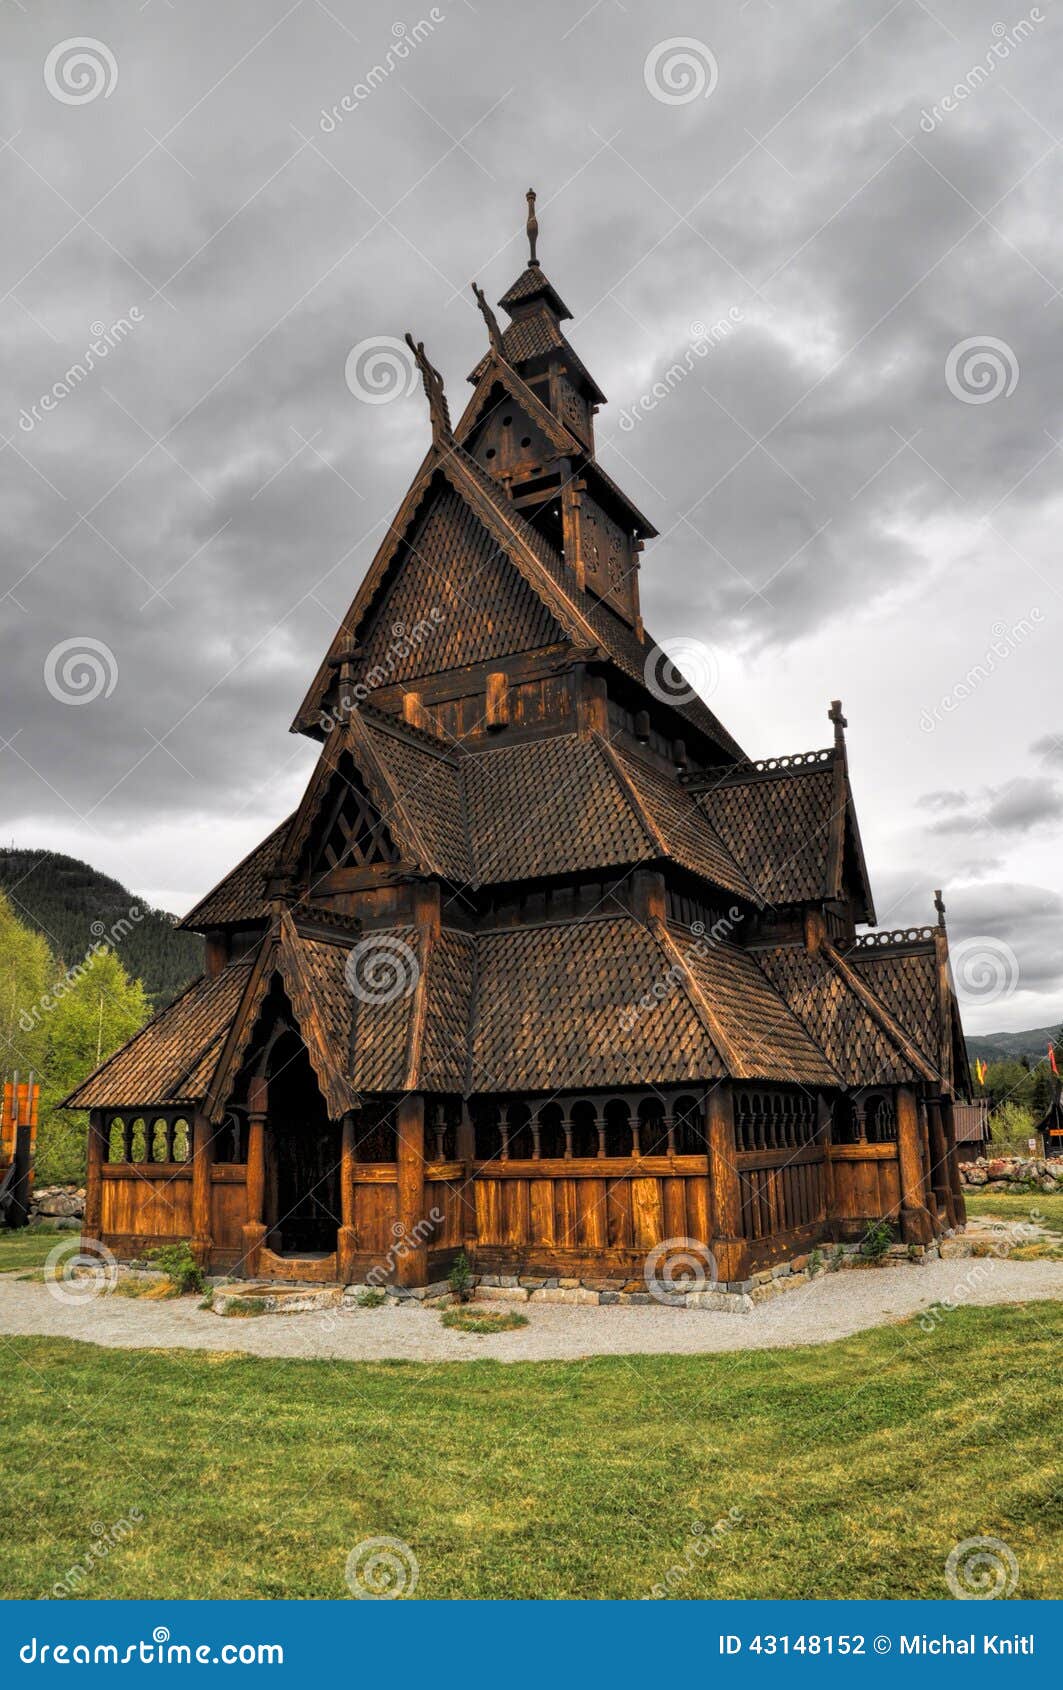 gol, wooden church in norway